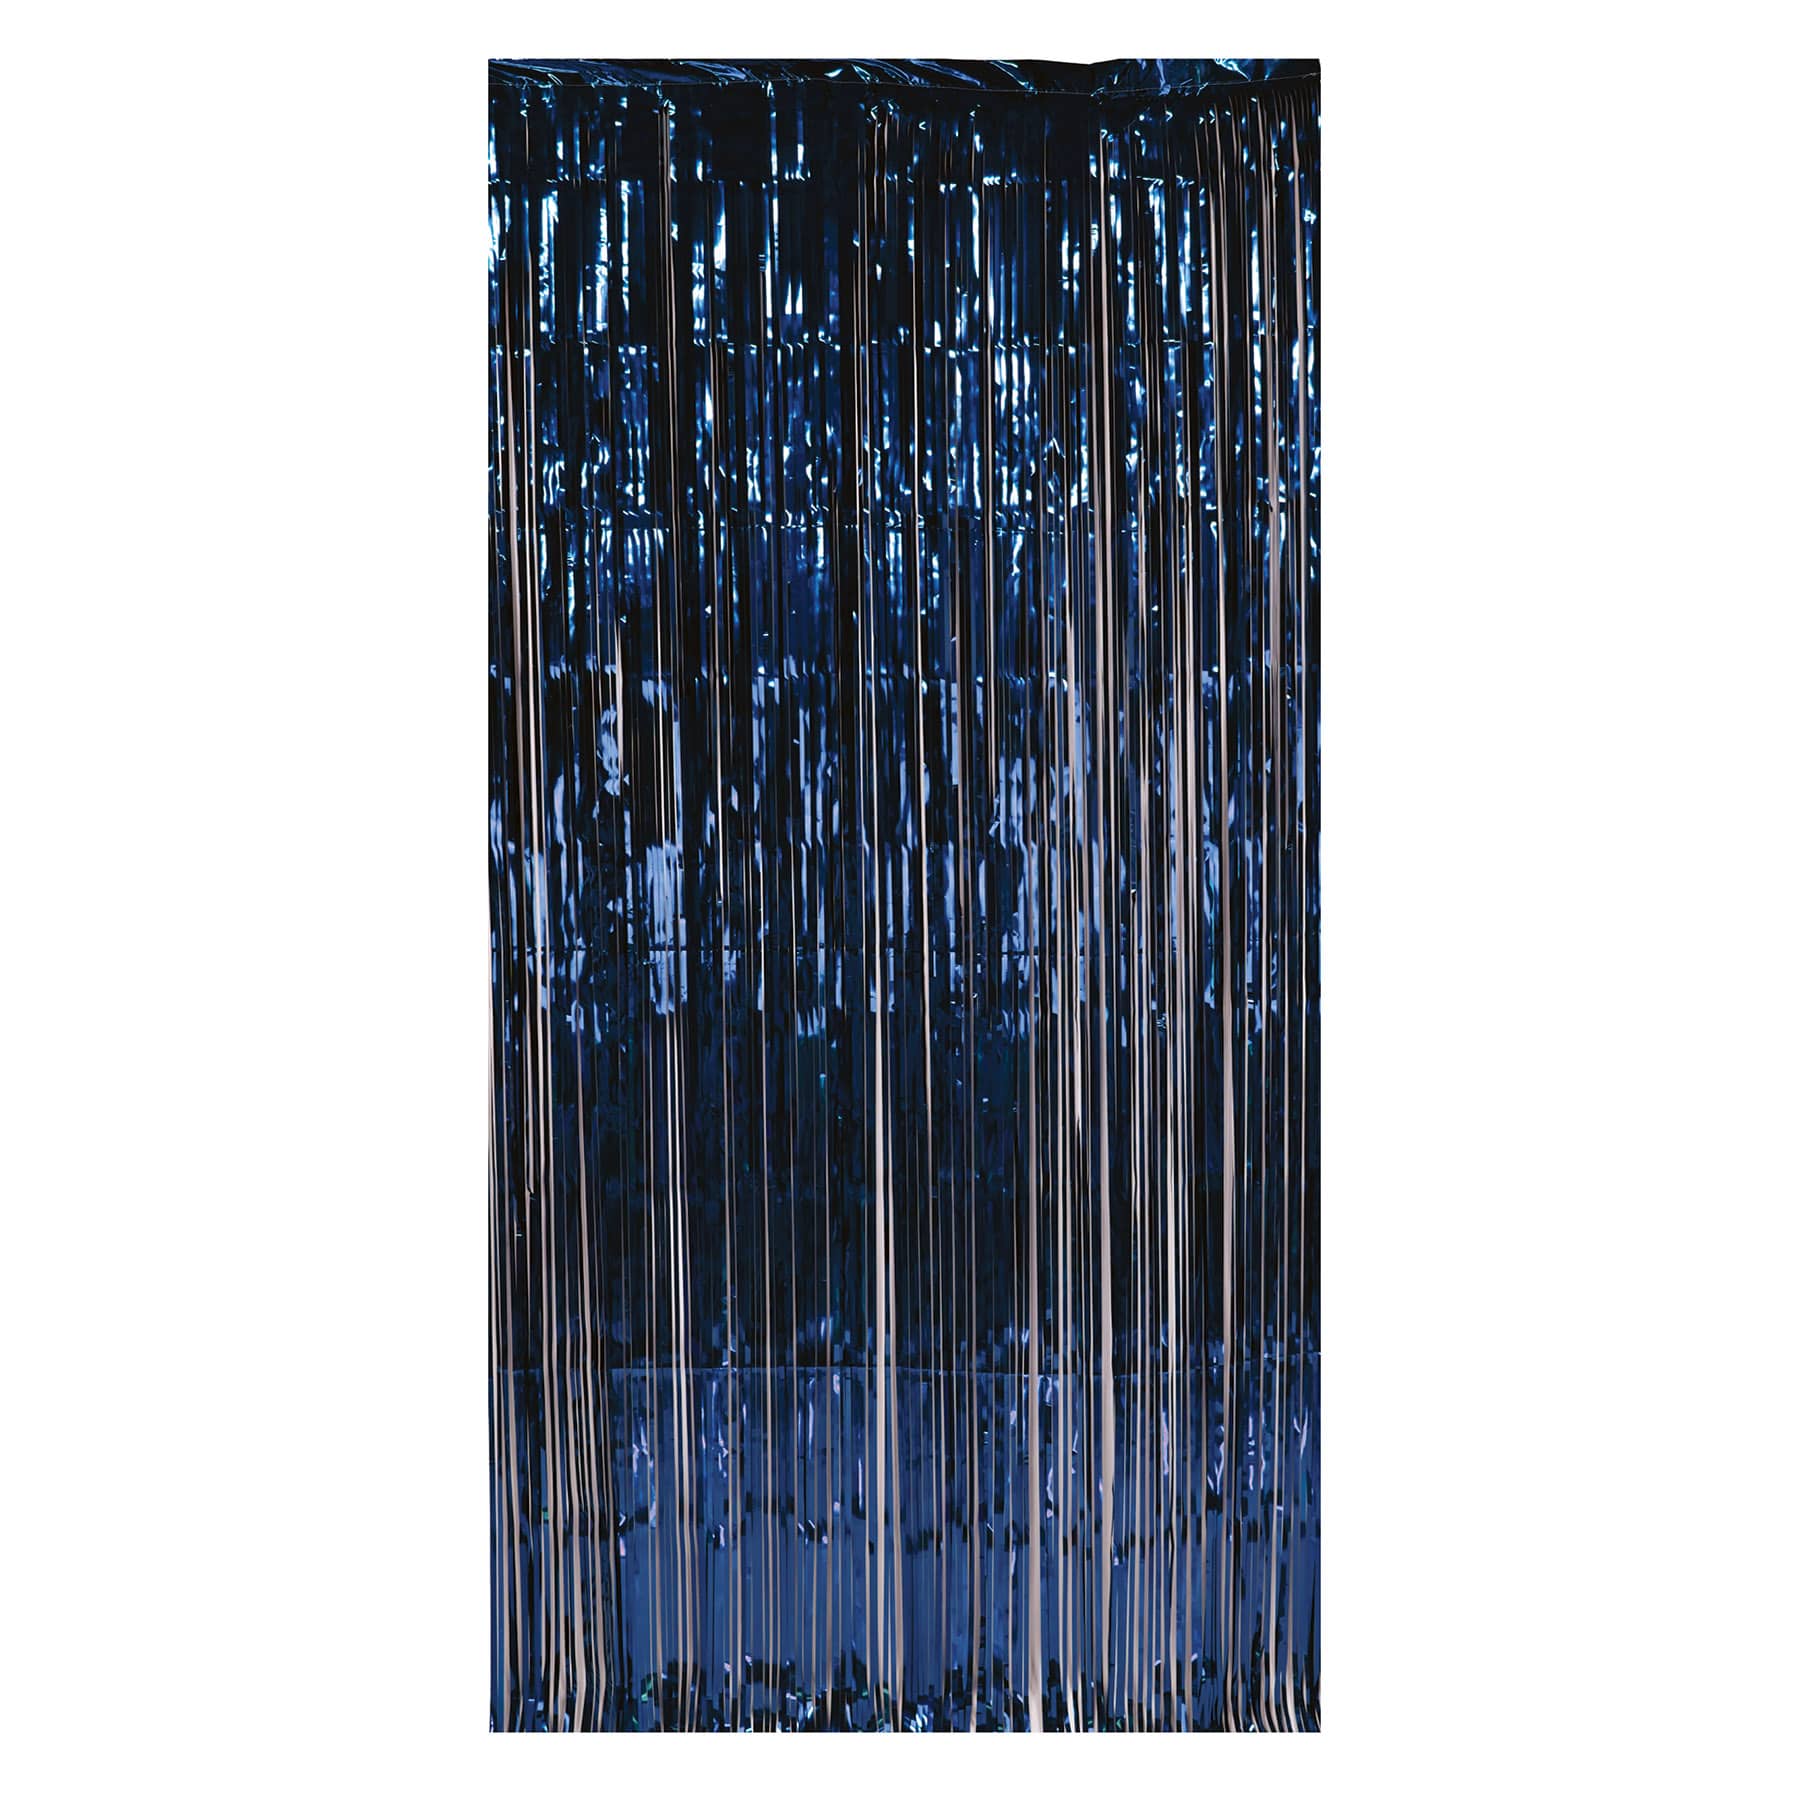 Navy Blue Doorway Curtain made of metallic strands